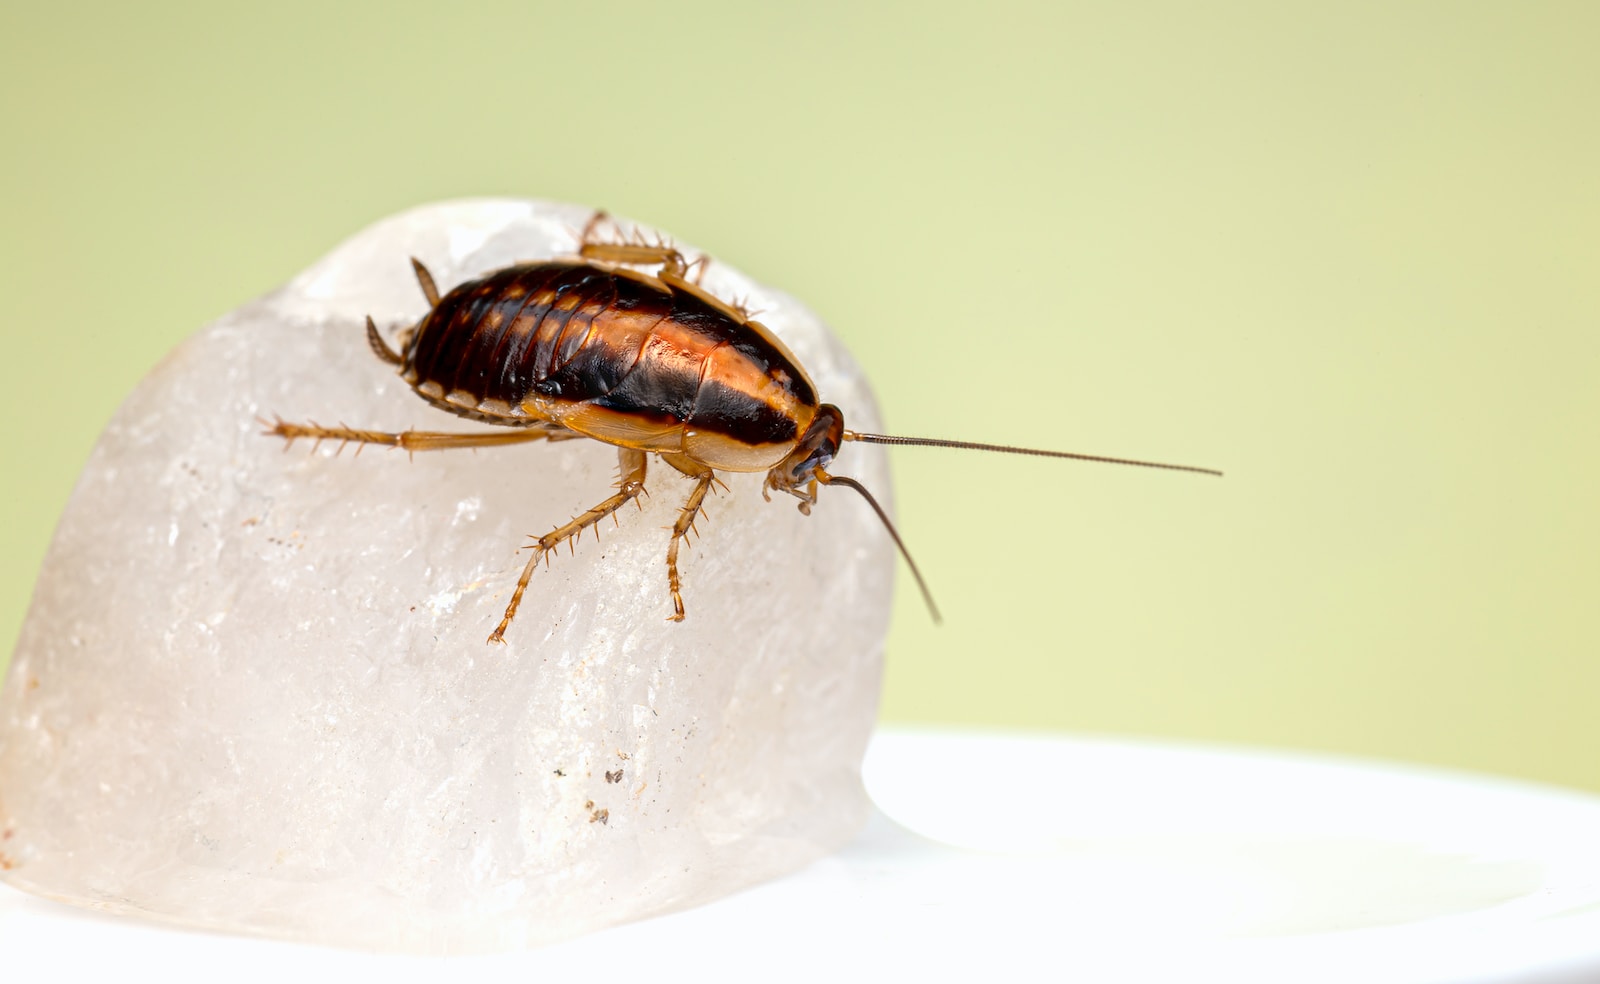 cucaracha sobre hielo seco color blanco